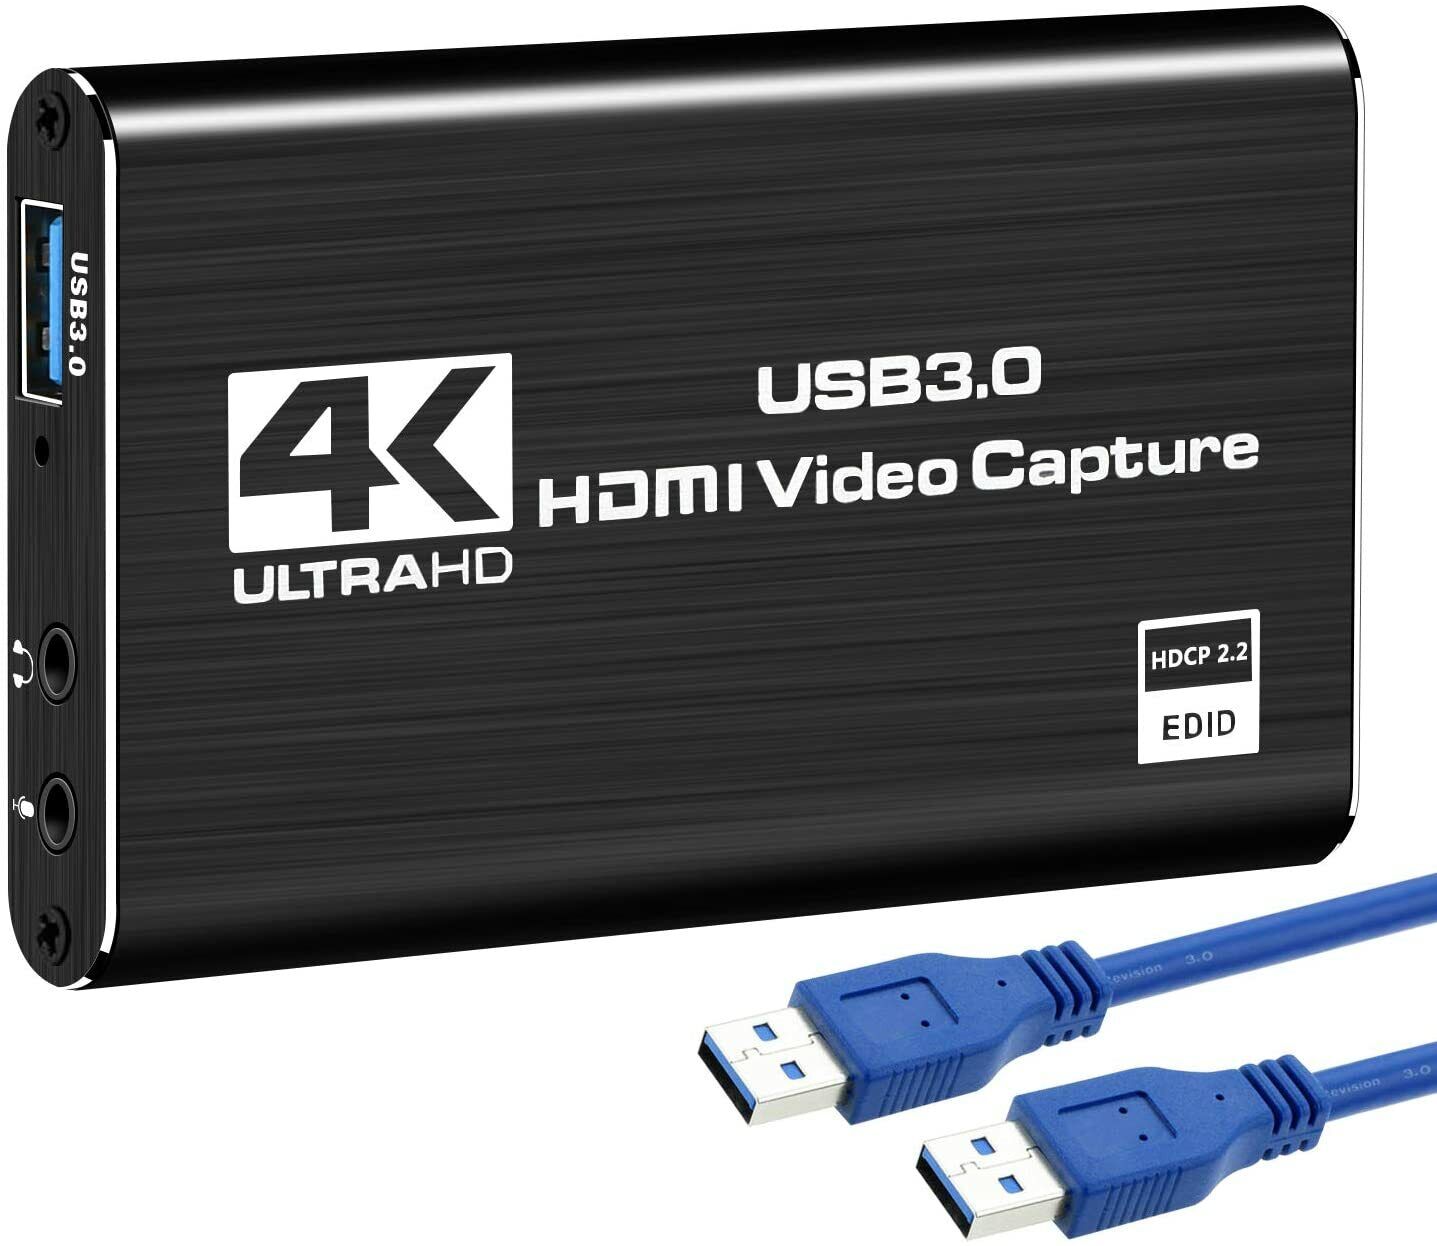 DIGITNOW 4K Audio Video Capture Card, USB 3.0 HDMI Video Capture Device Full HD